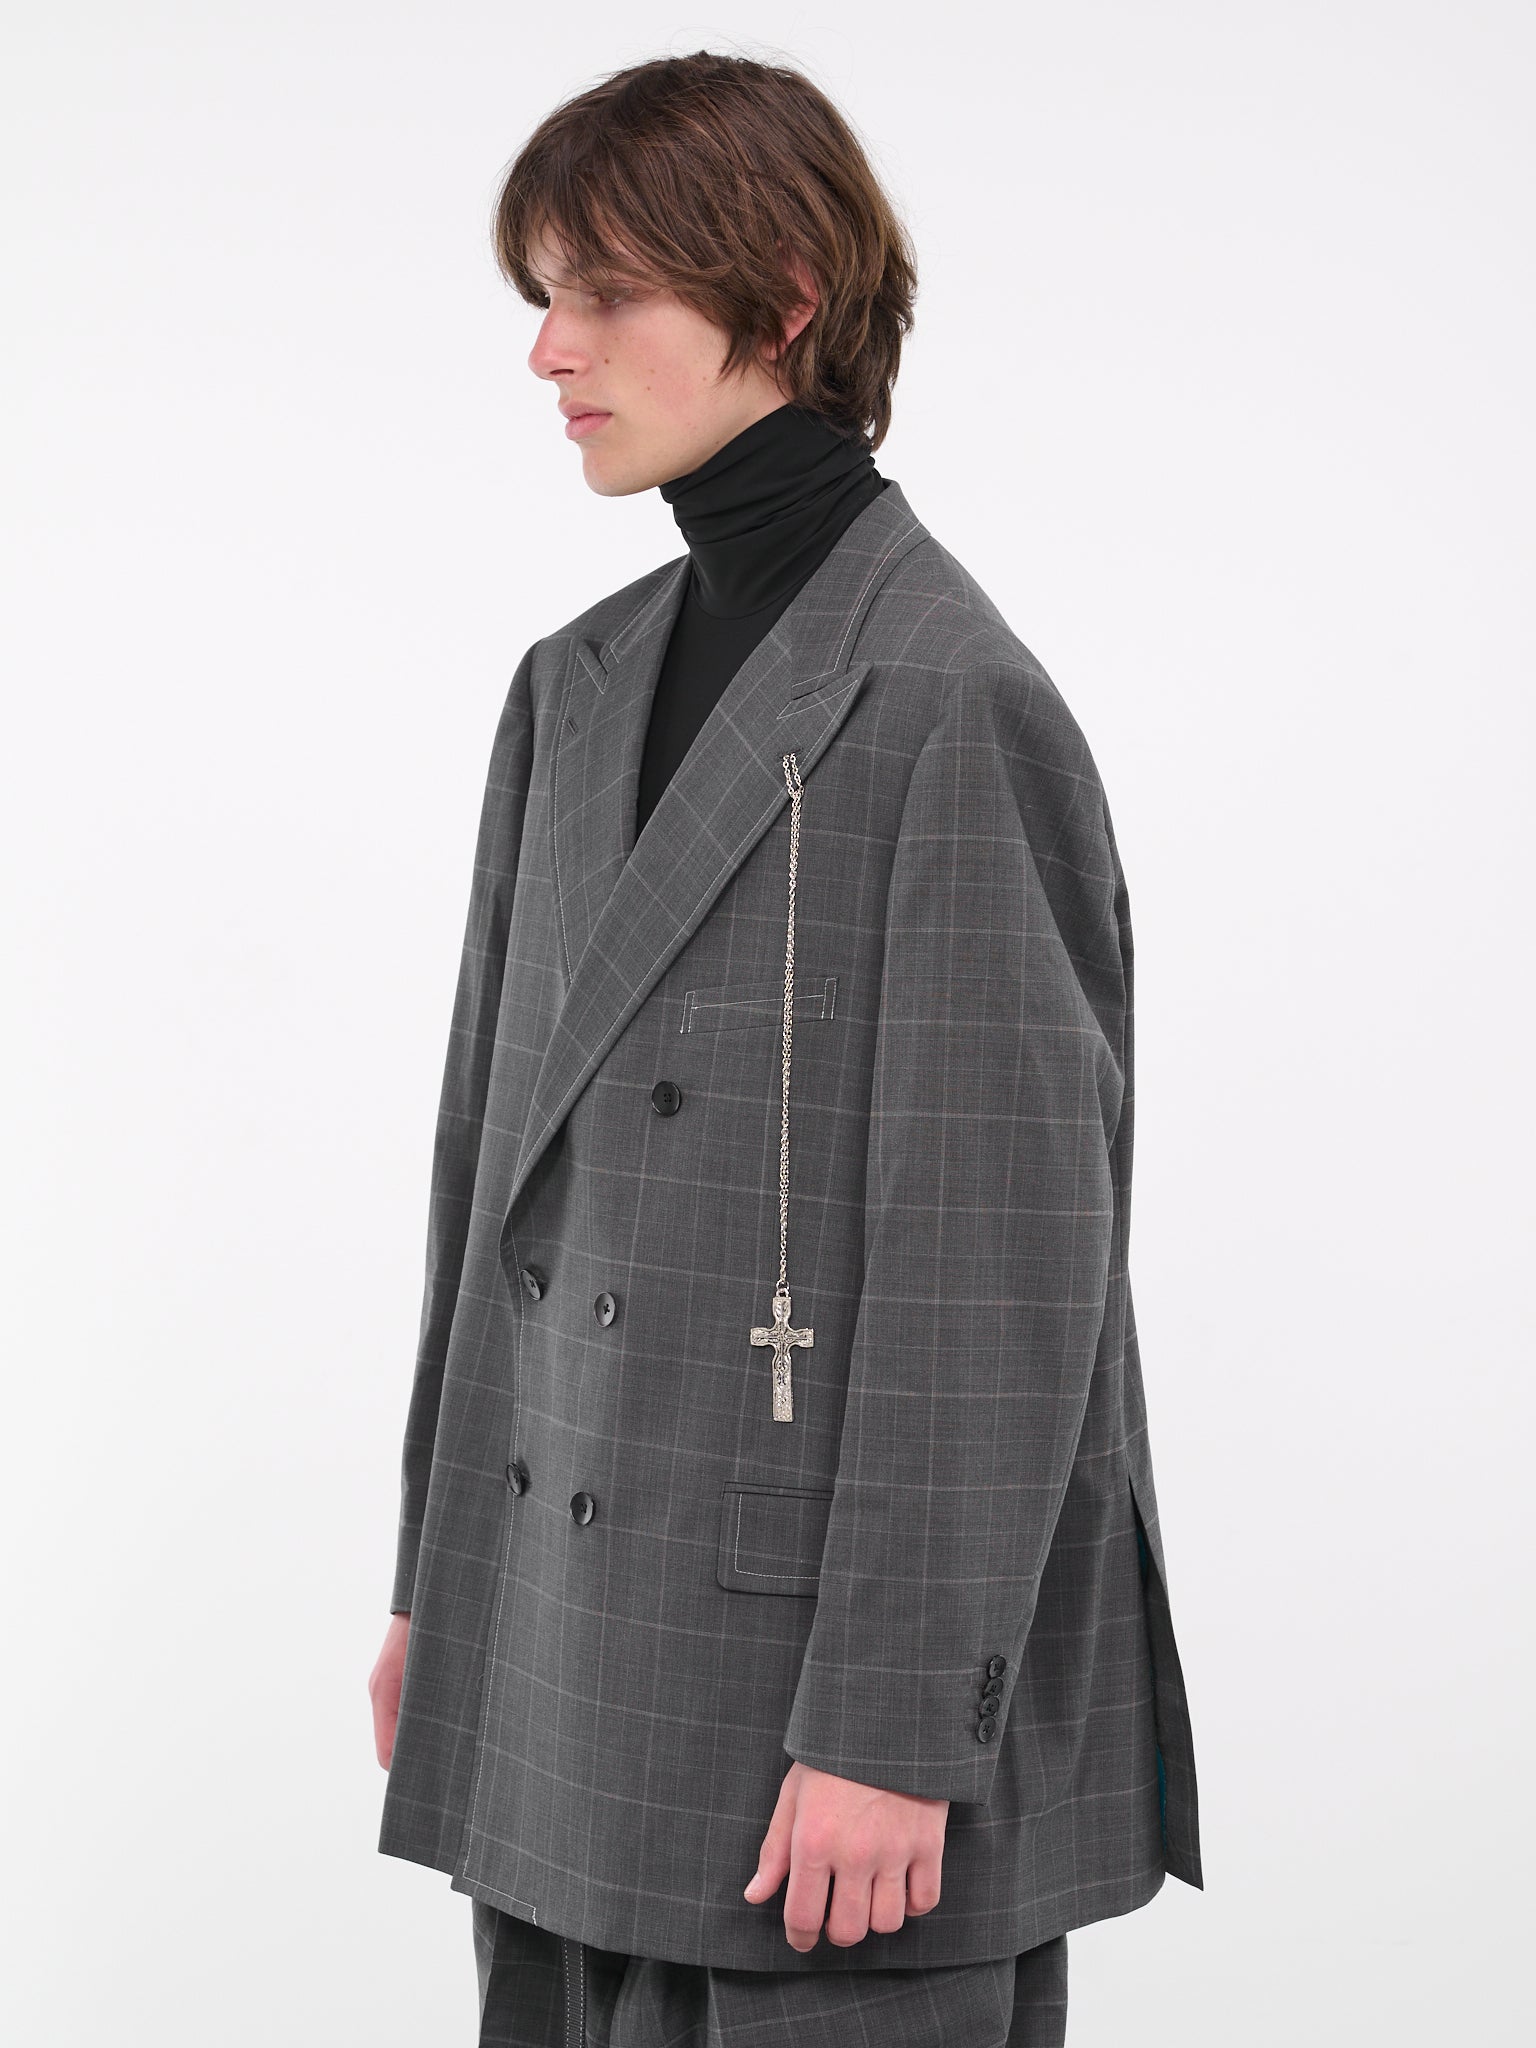 Plaid Suit Jacket (BS239404-PLAID)